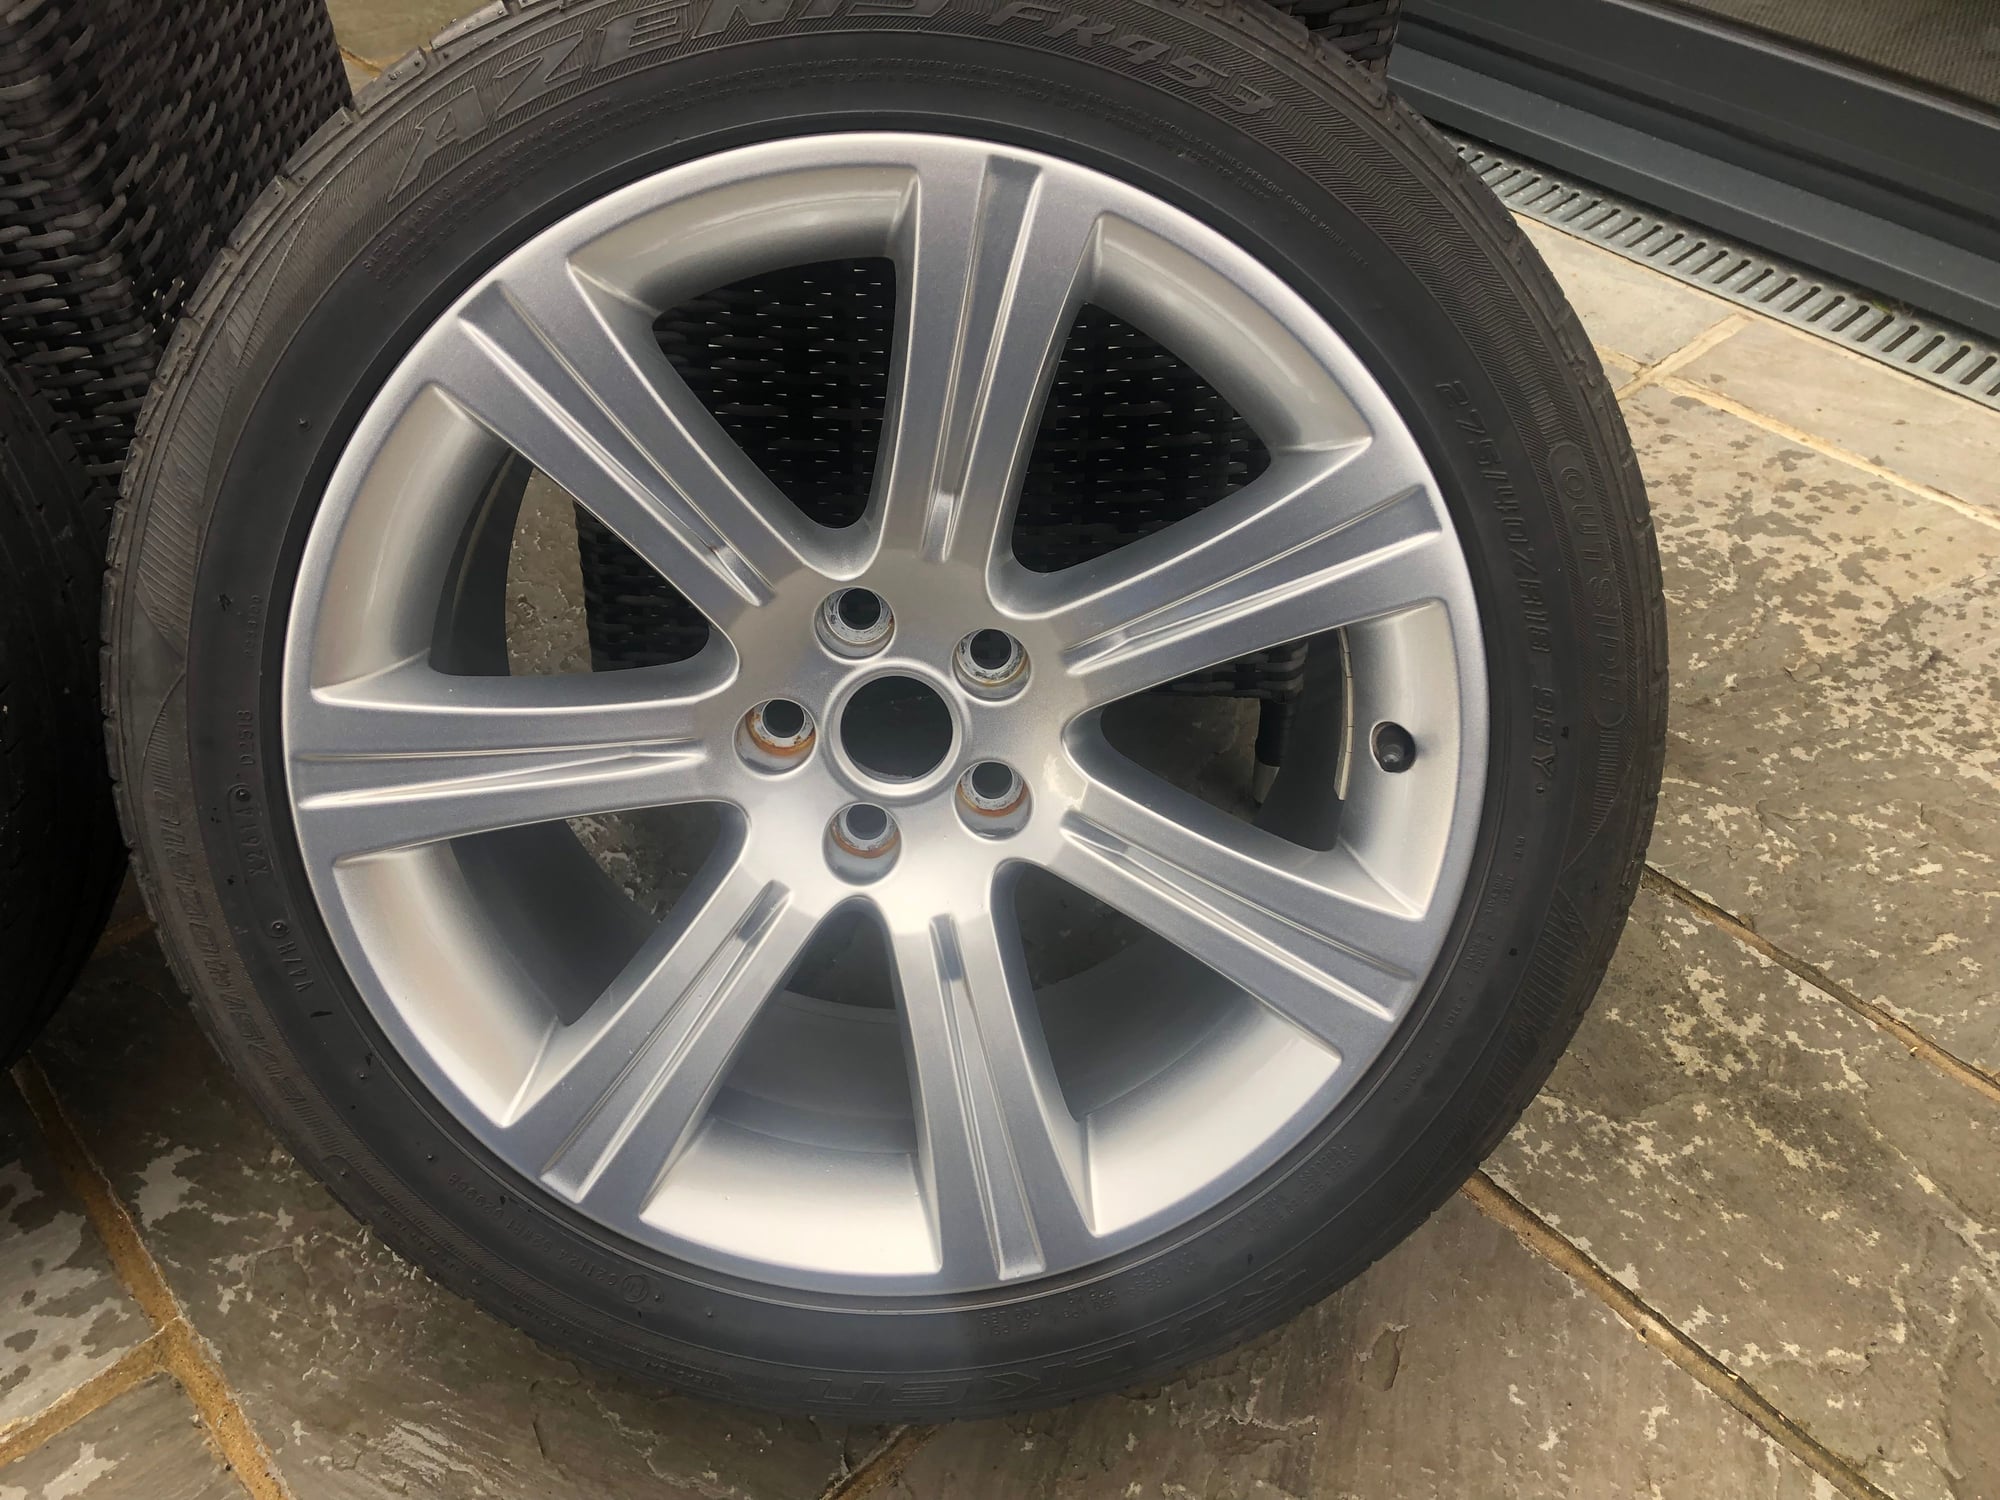 Wheels and Tires/Axles - Xk 18" venus alloy wheels - Used - 2006 to 2015 Jaguar XK - London NW73QB, United Kingdom